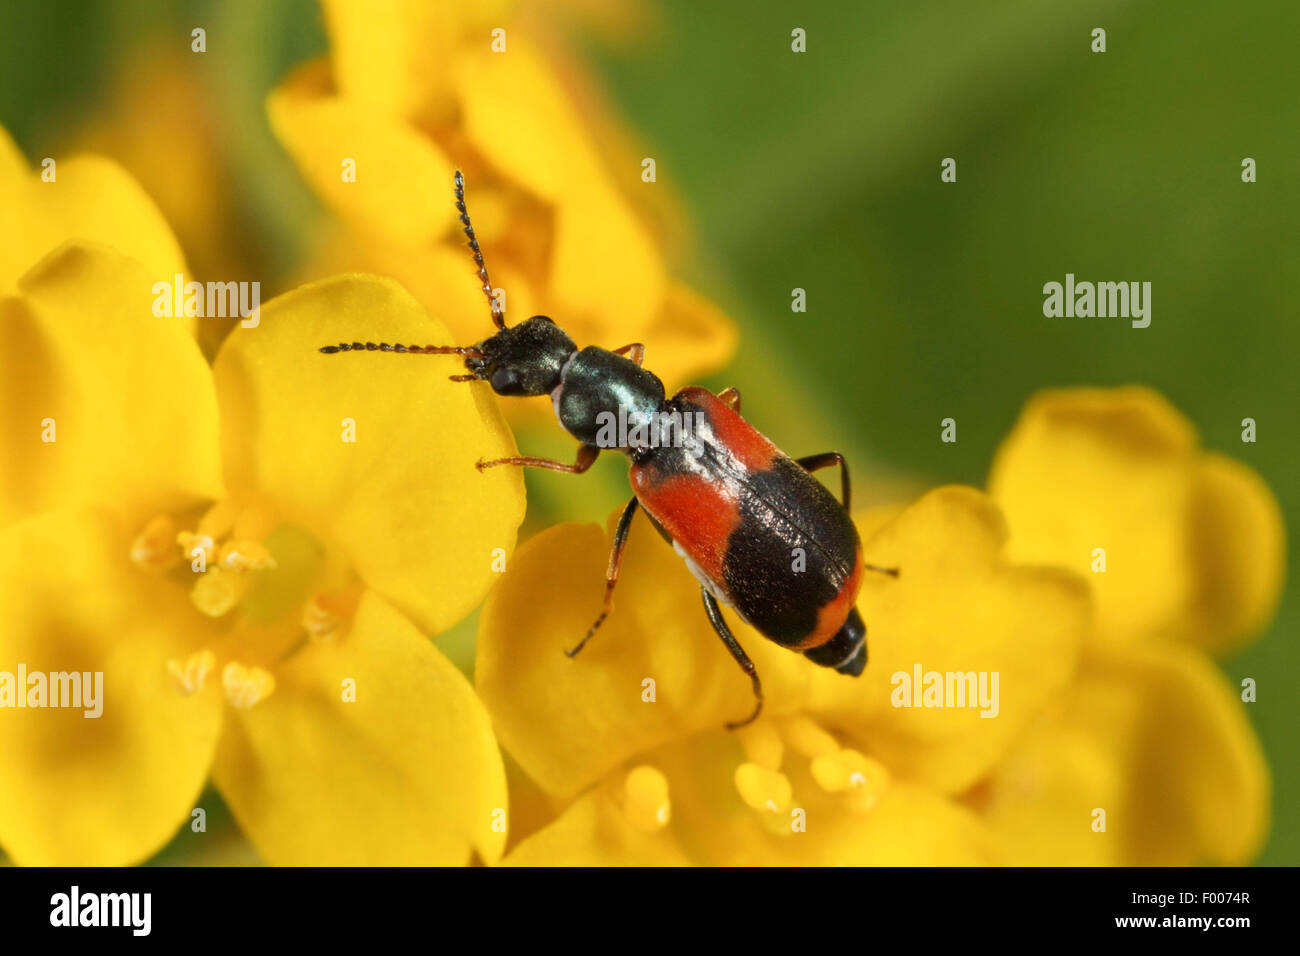 Flower beetle (Anthocomus fasciatus), sitting on yellow flowers, Germany Stock Photo